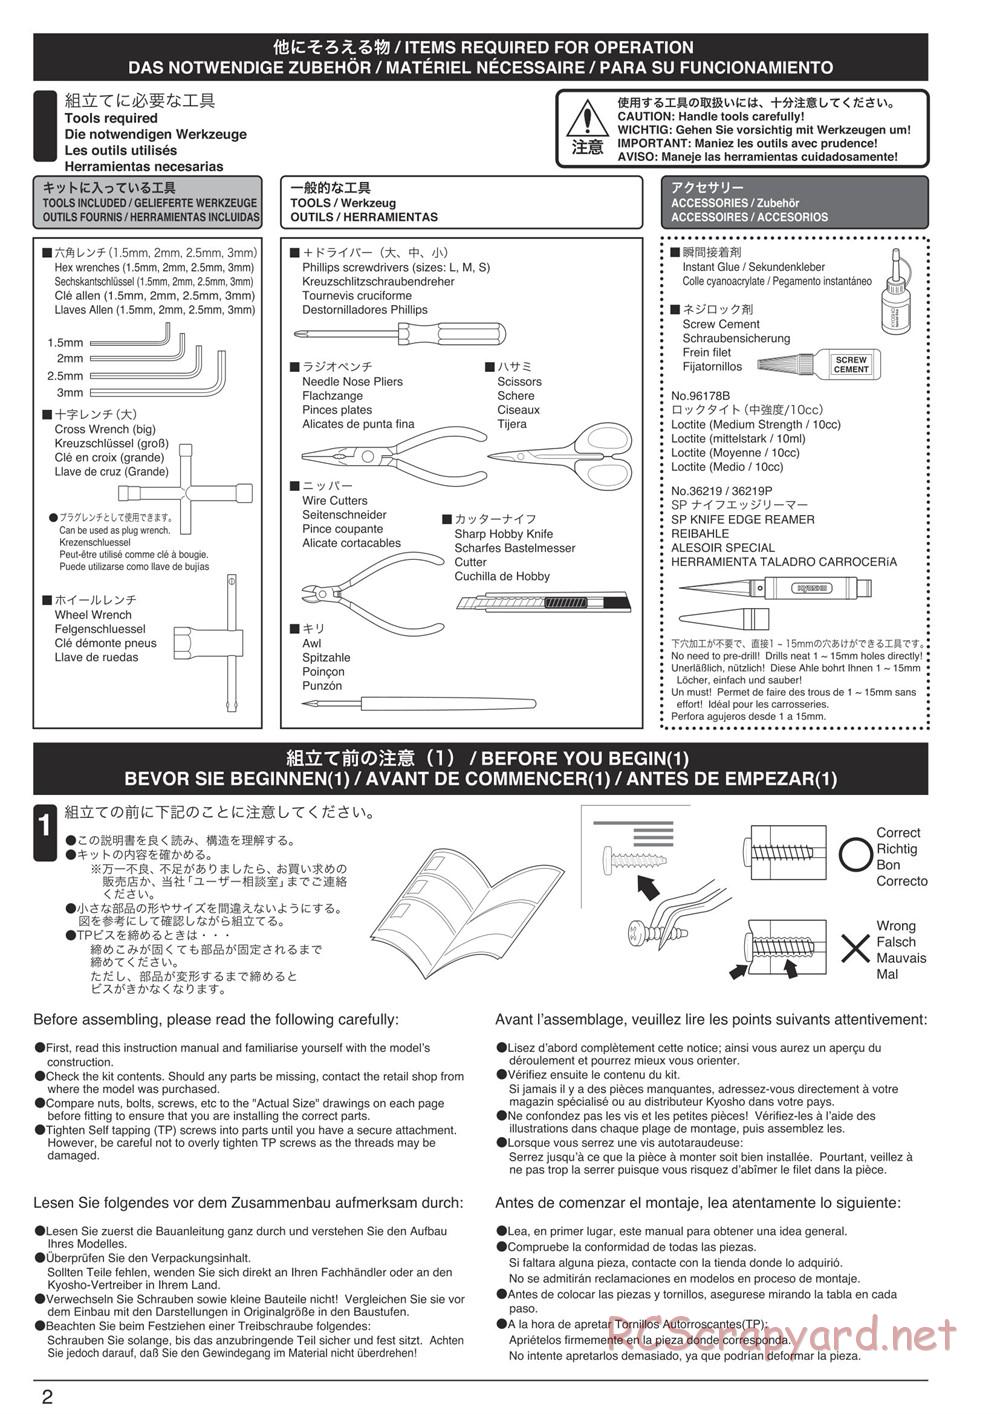 Kyosho - FO-XX 2.0 - Manual - Page 2